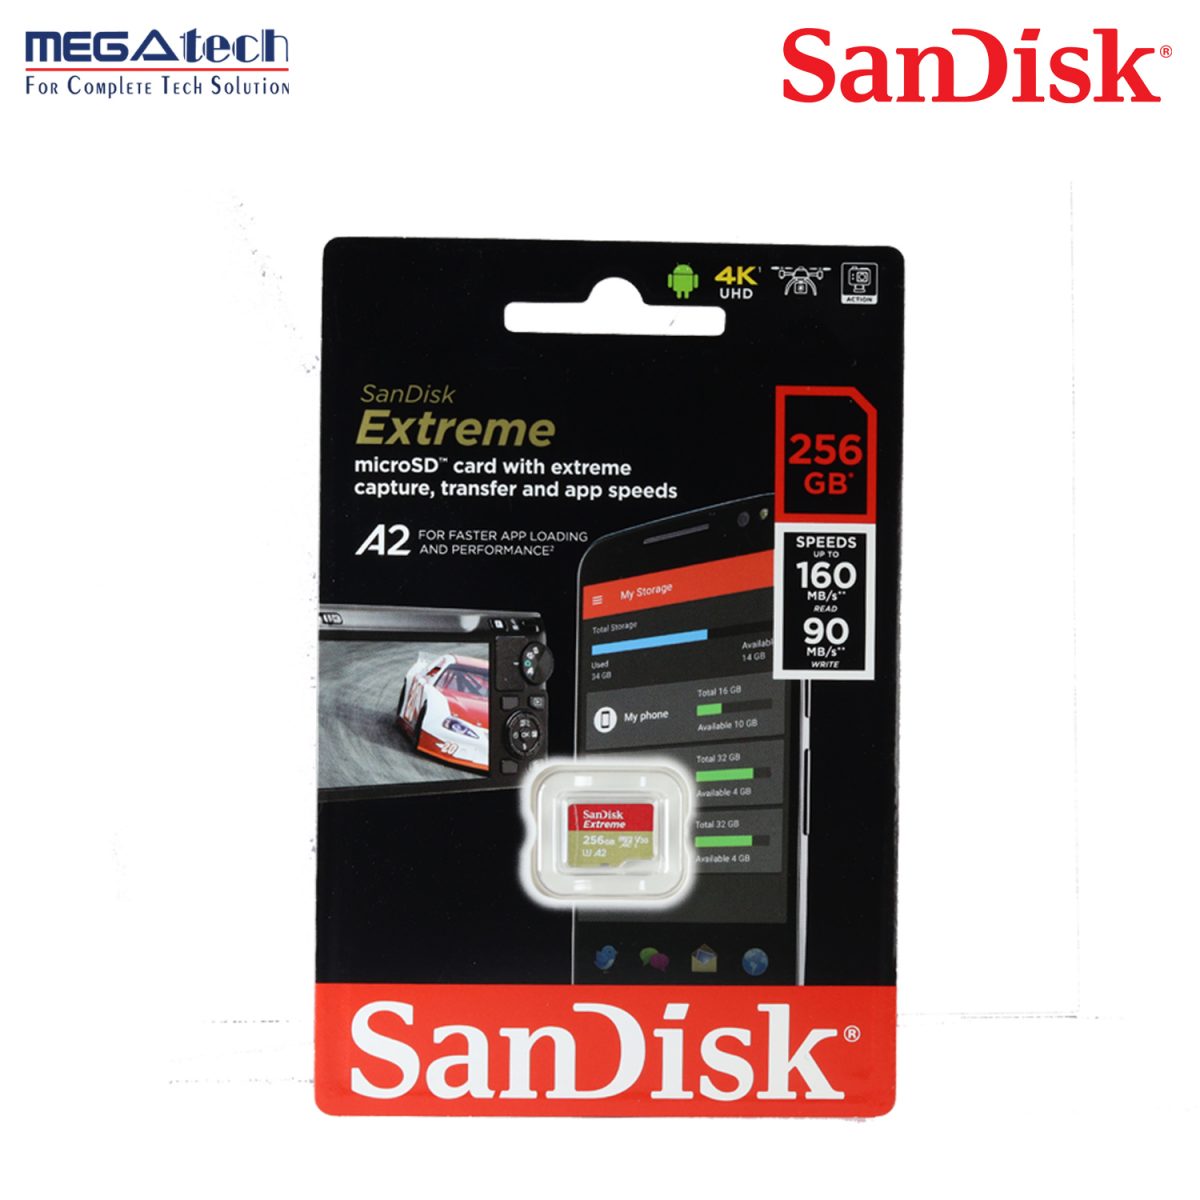 SanDisk 256GB Memory Card | 160MB/s